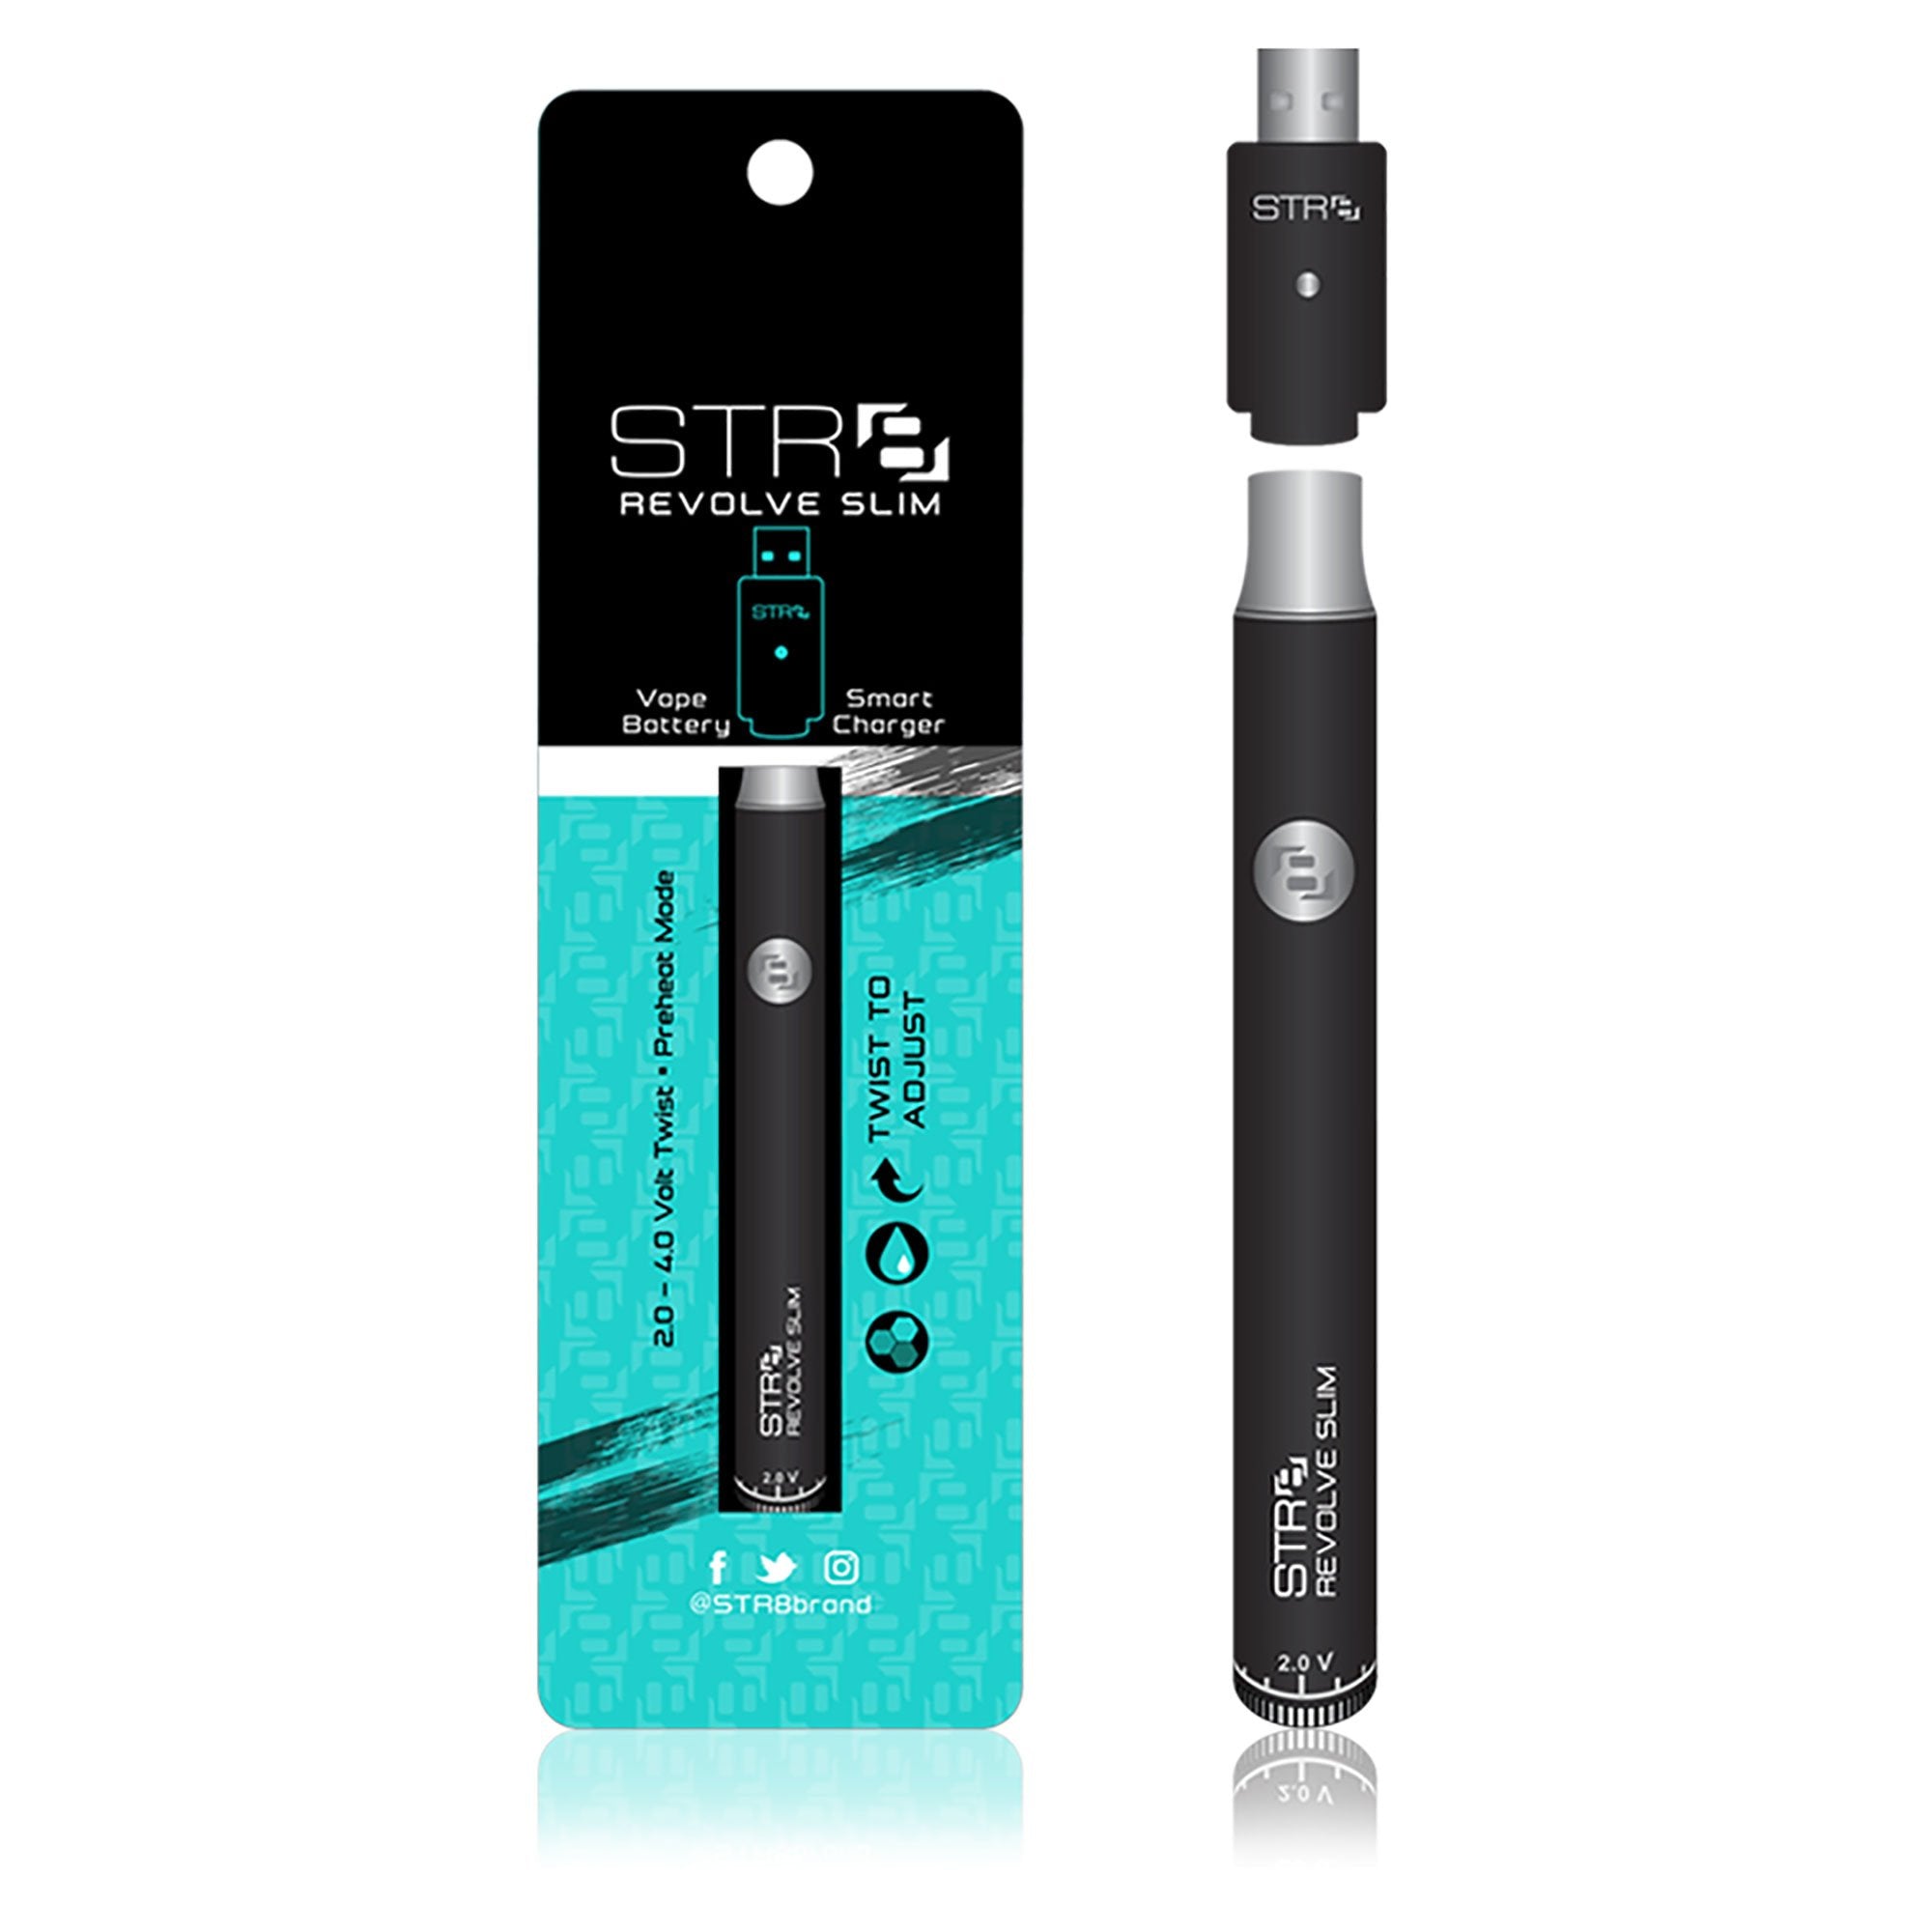 STR8 | Revolve Slim Vape Batteries w/ Charger | 320mAh - Black - 10 Count - 1